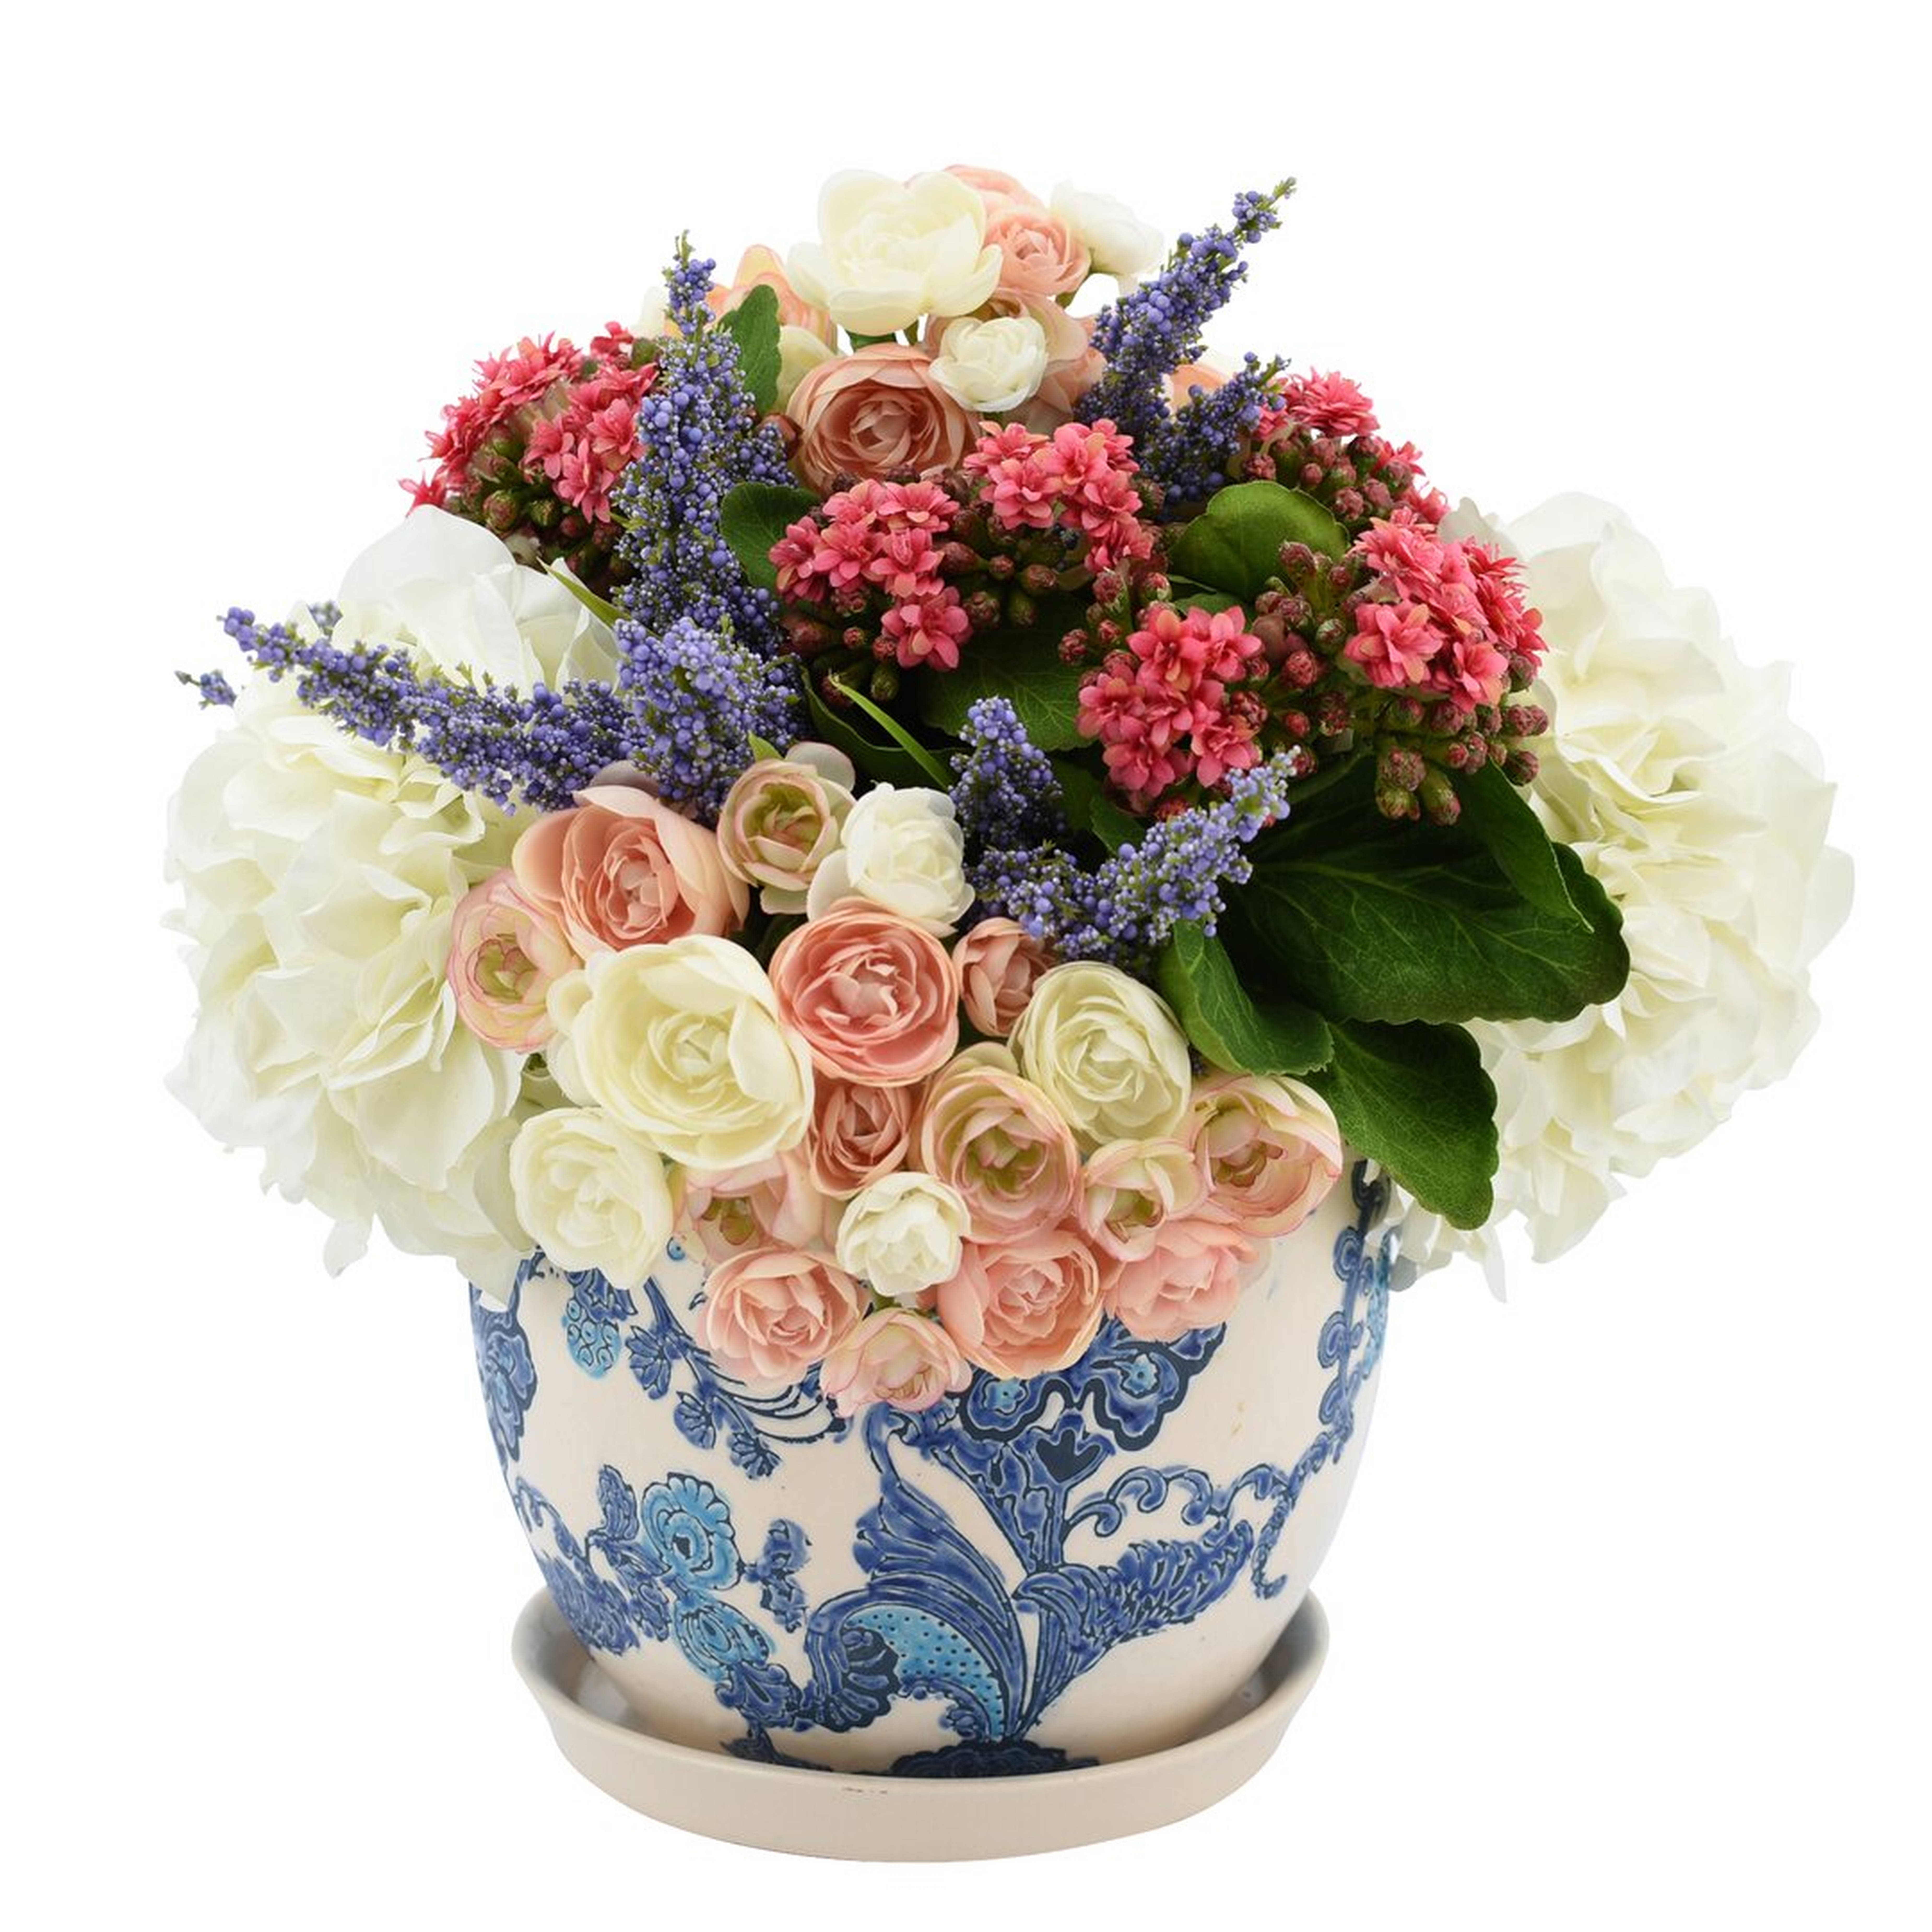 "Creative Displays, Inc. Assorted Ranunculus and Hydrangea Mixed in Vase" - Perigold